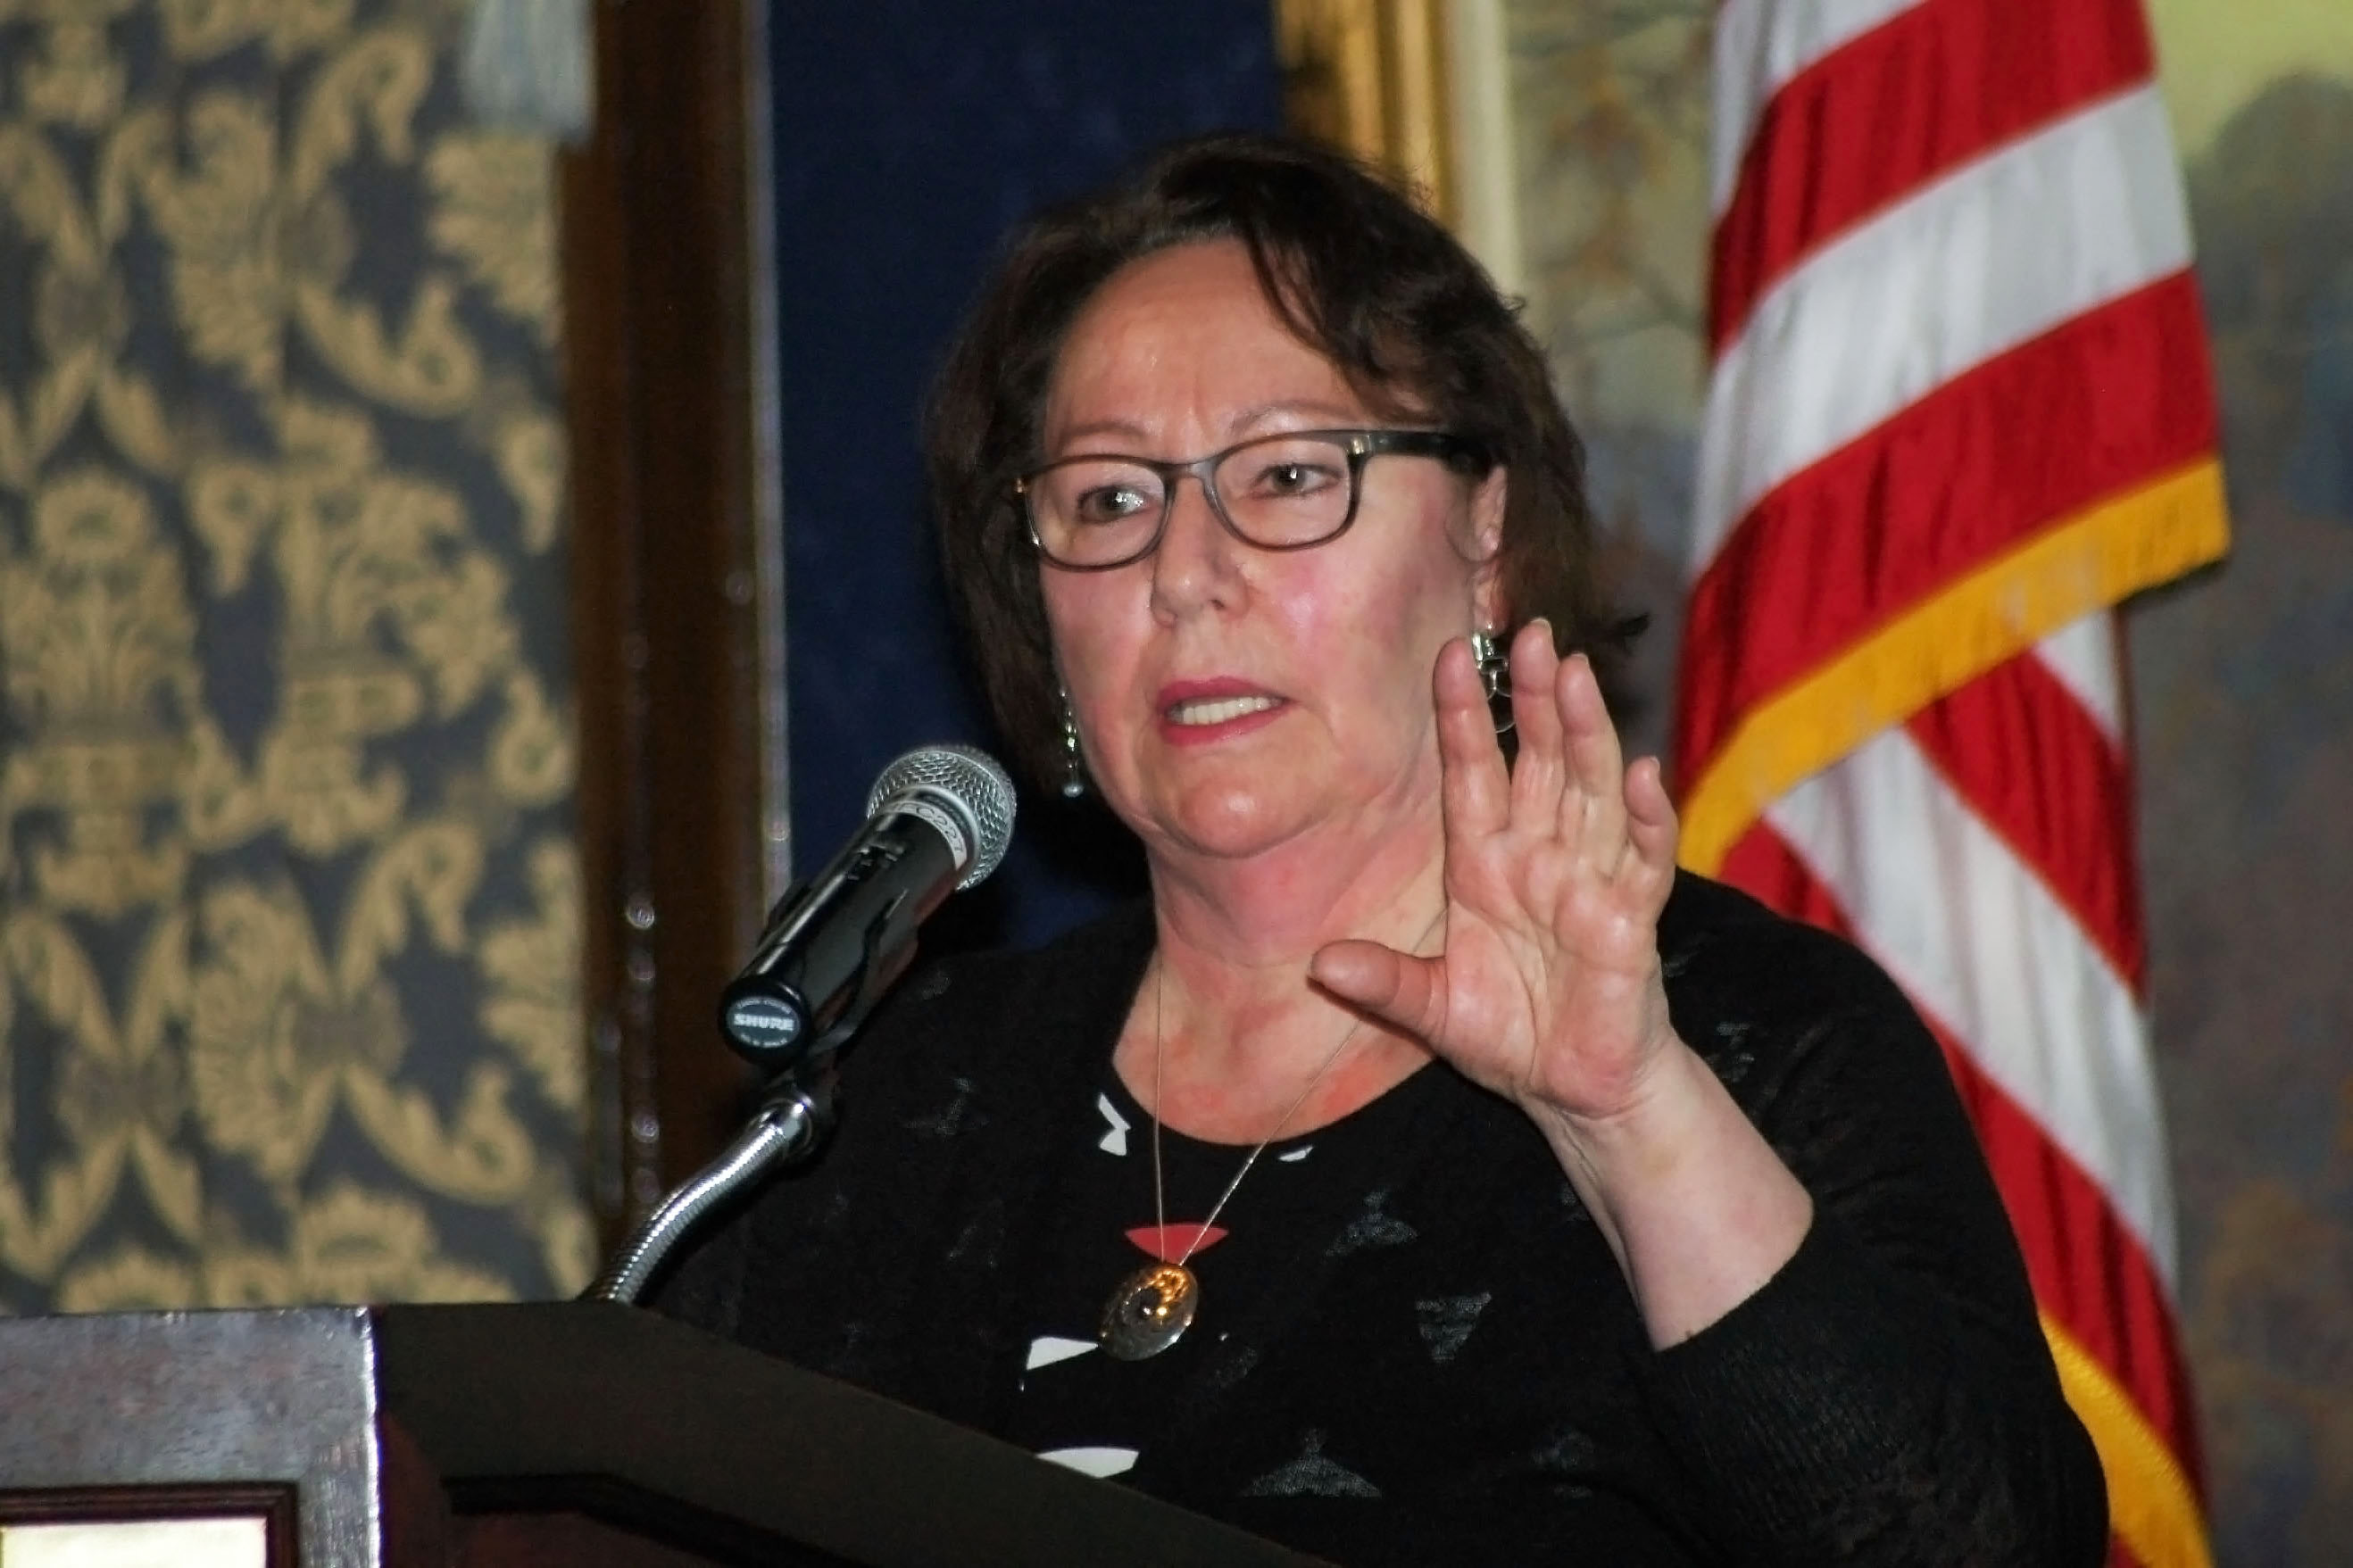 Sheila Watt-Cloutier was the keynote speaker at the 2016 World Chicago's International Women's Day Luncheon